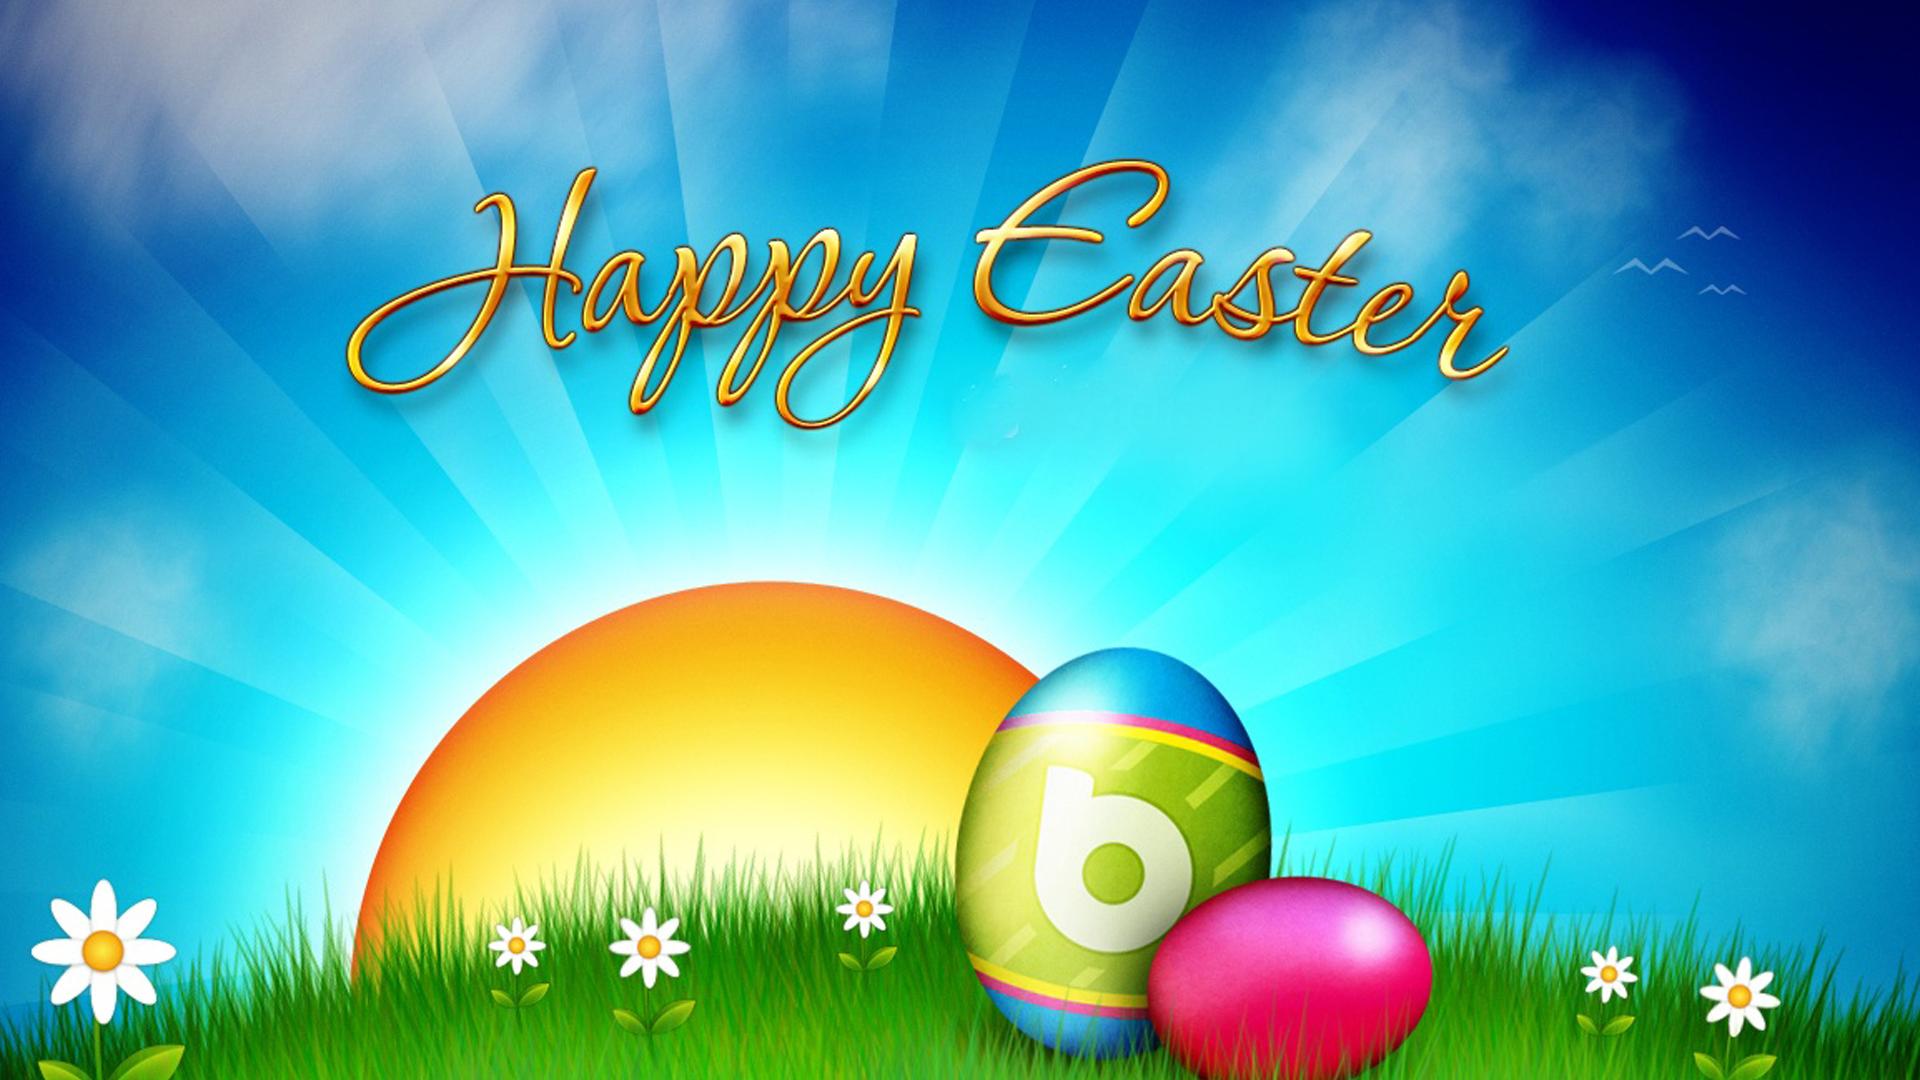 Happy Easter HD Wallpapers Download Free Desktop Wallpaper Images